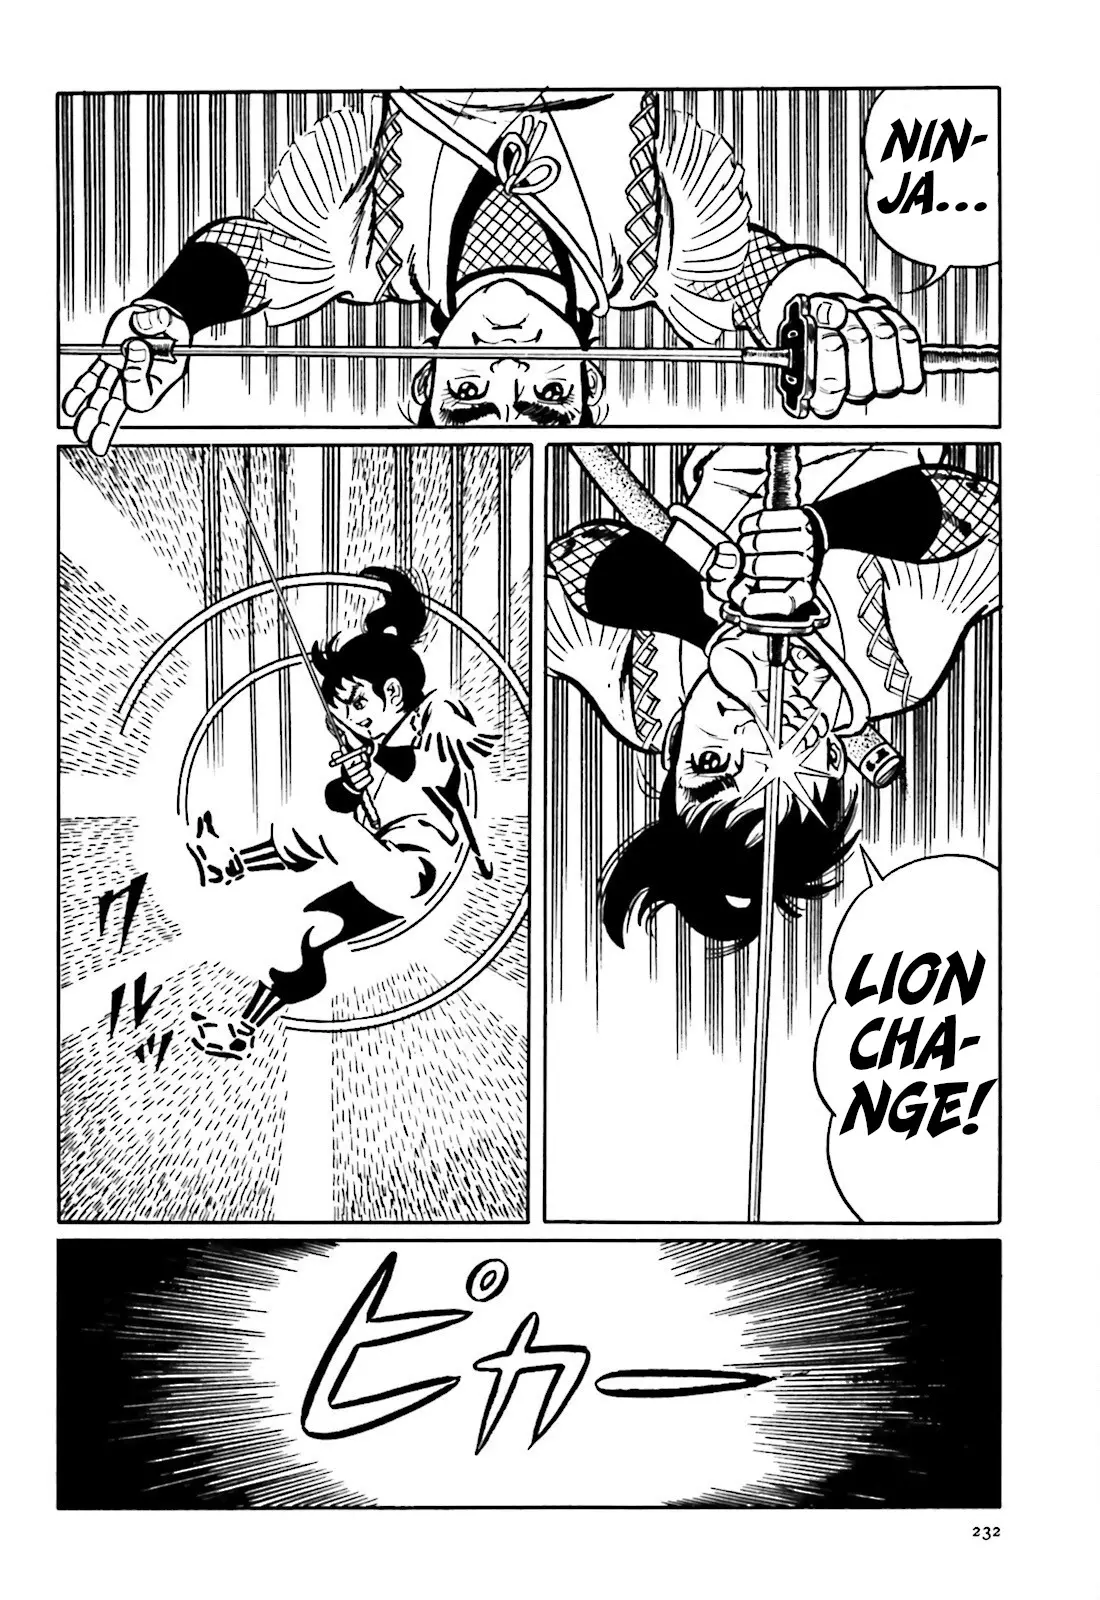 The Vigilant Lionmaru - 5 page 18-0802561f